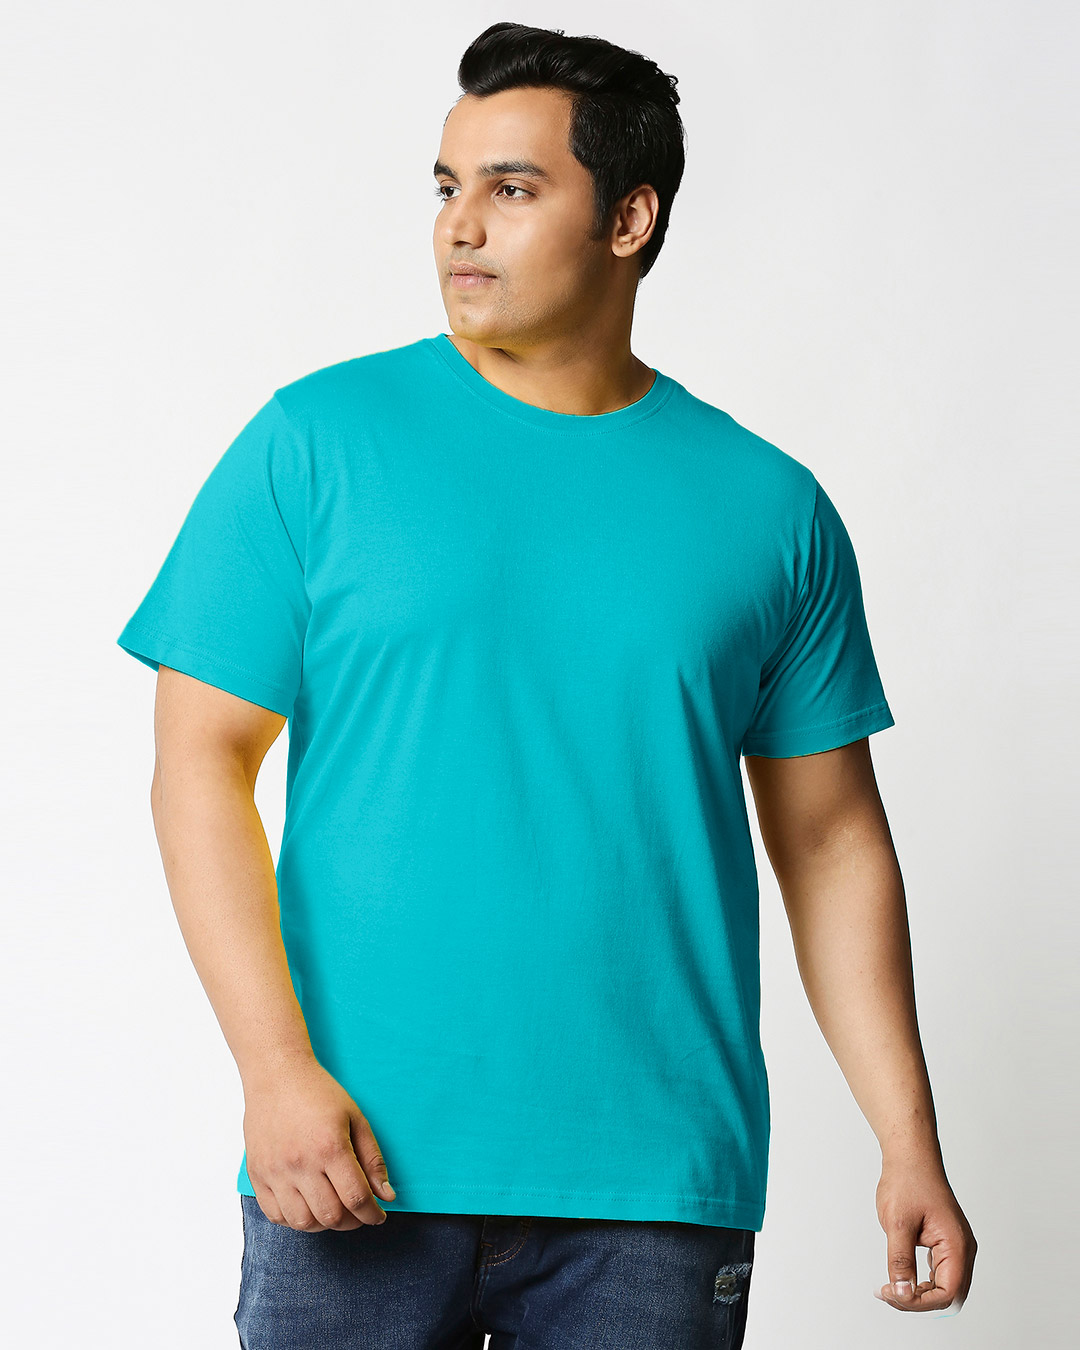 Buy Men S Tropical Blue Plus Size T Shirt Online At Bewakoof